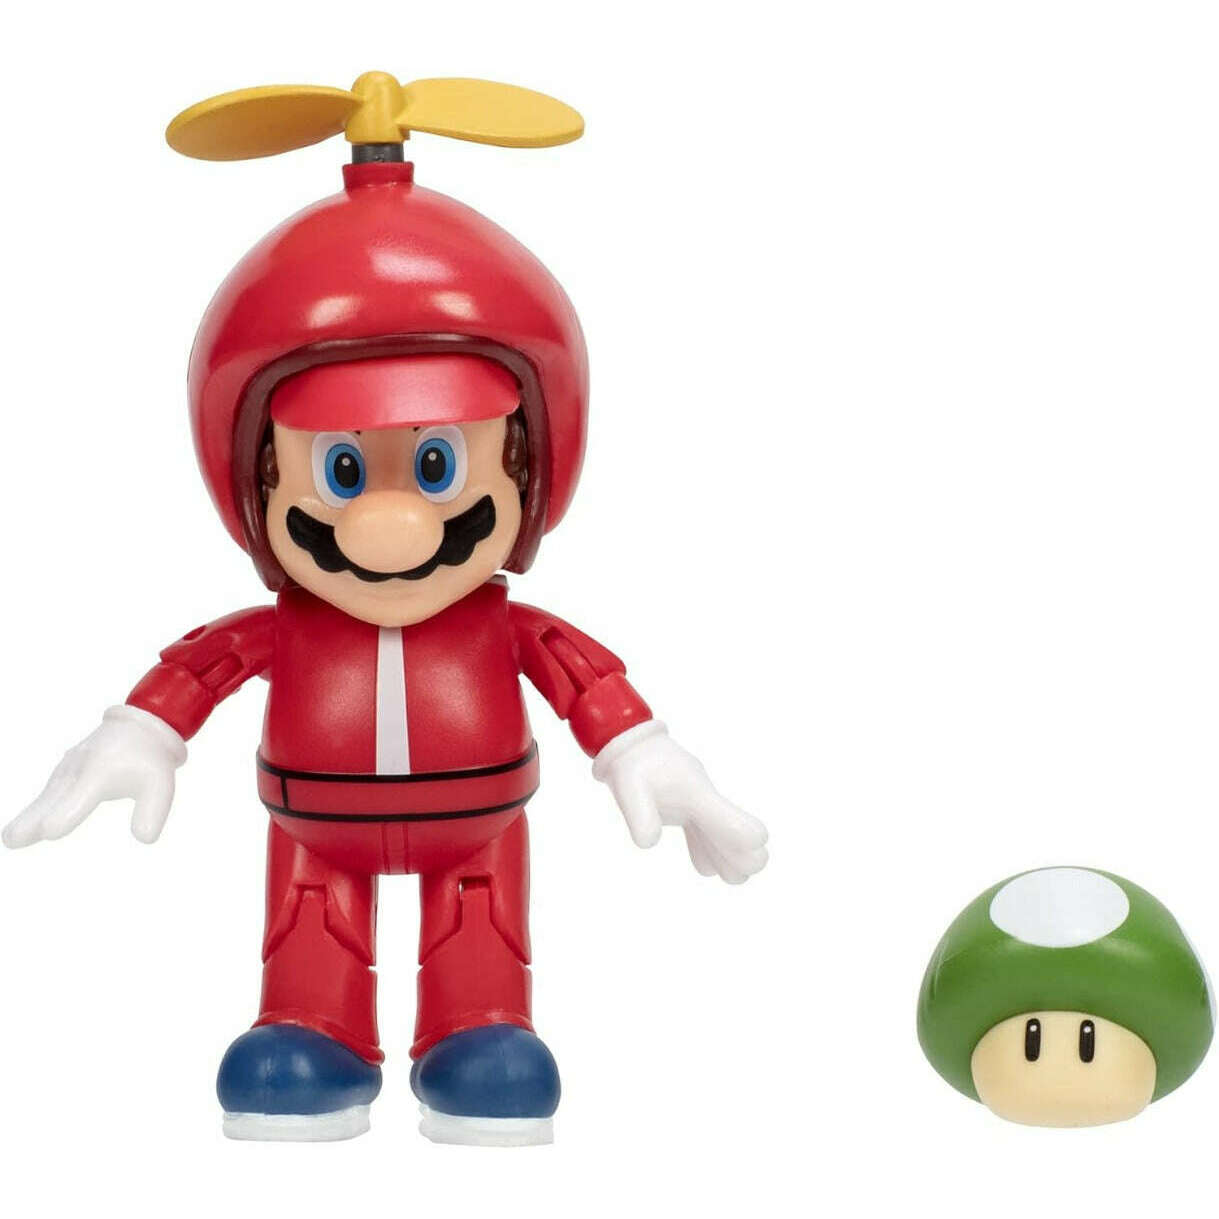 Toys N Tuck:Super Mario 4 Inch Figures - Propeller Mario With 1-Up Mushroom,Super Mario